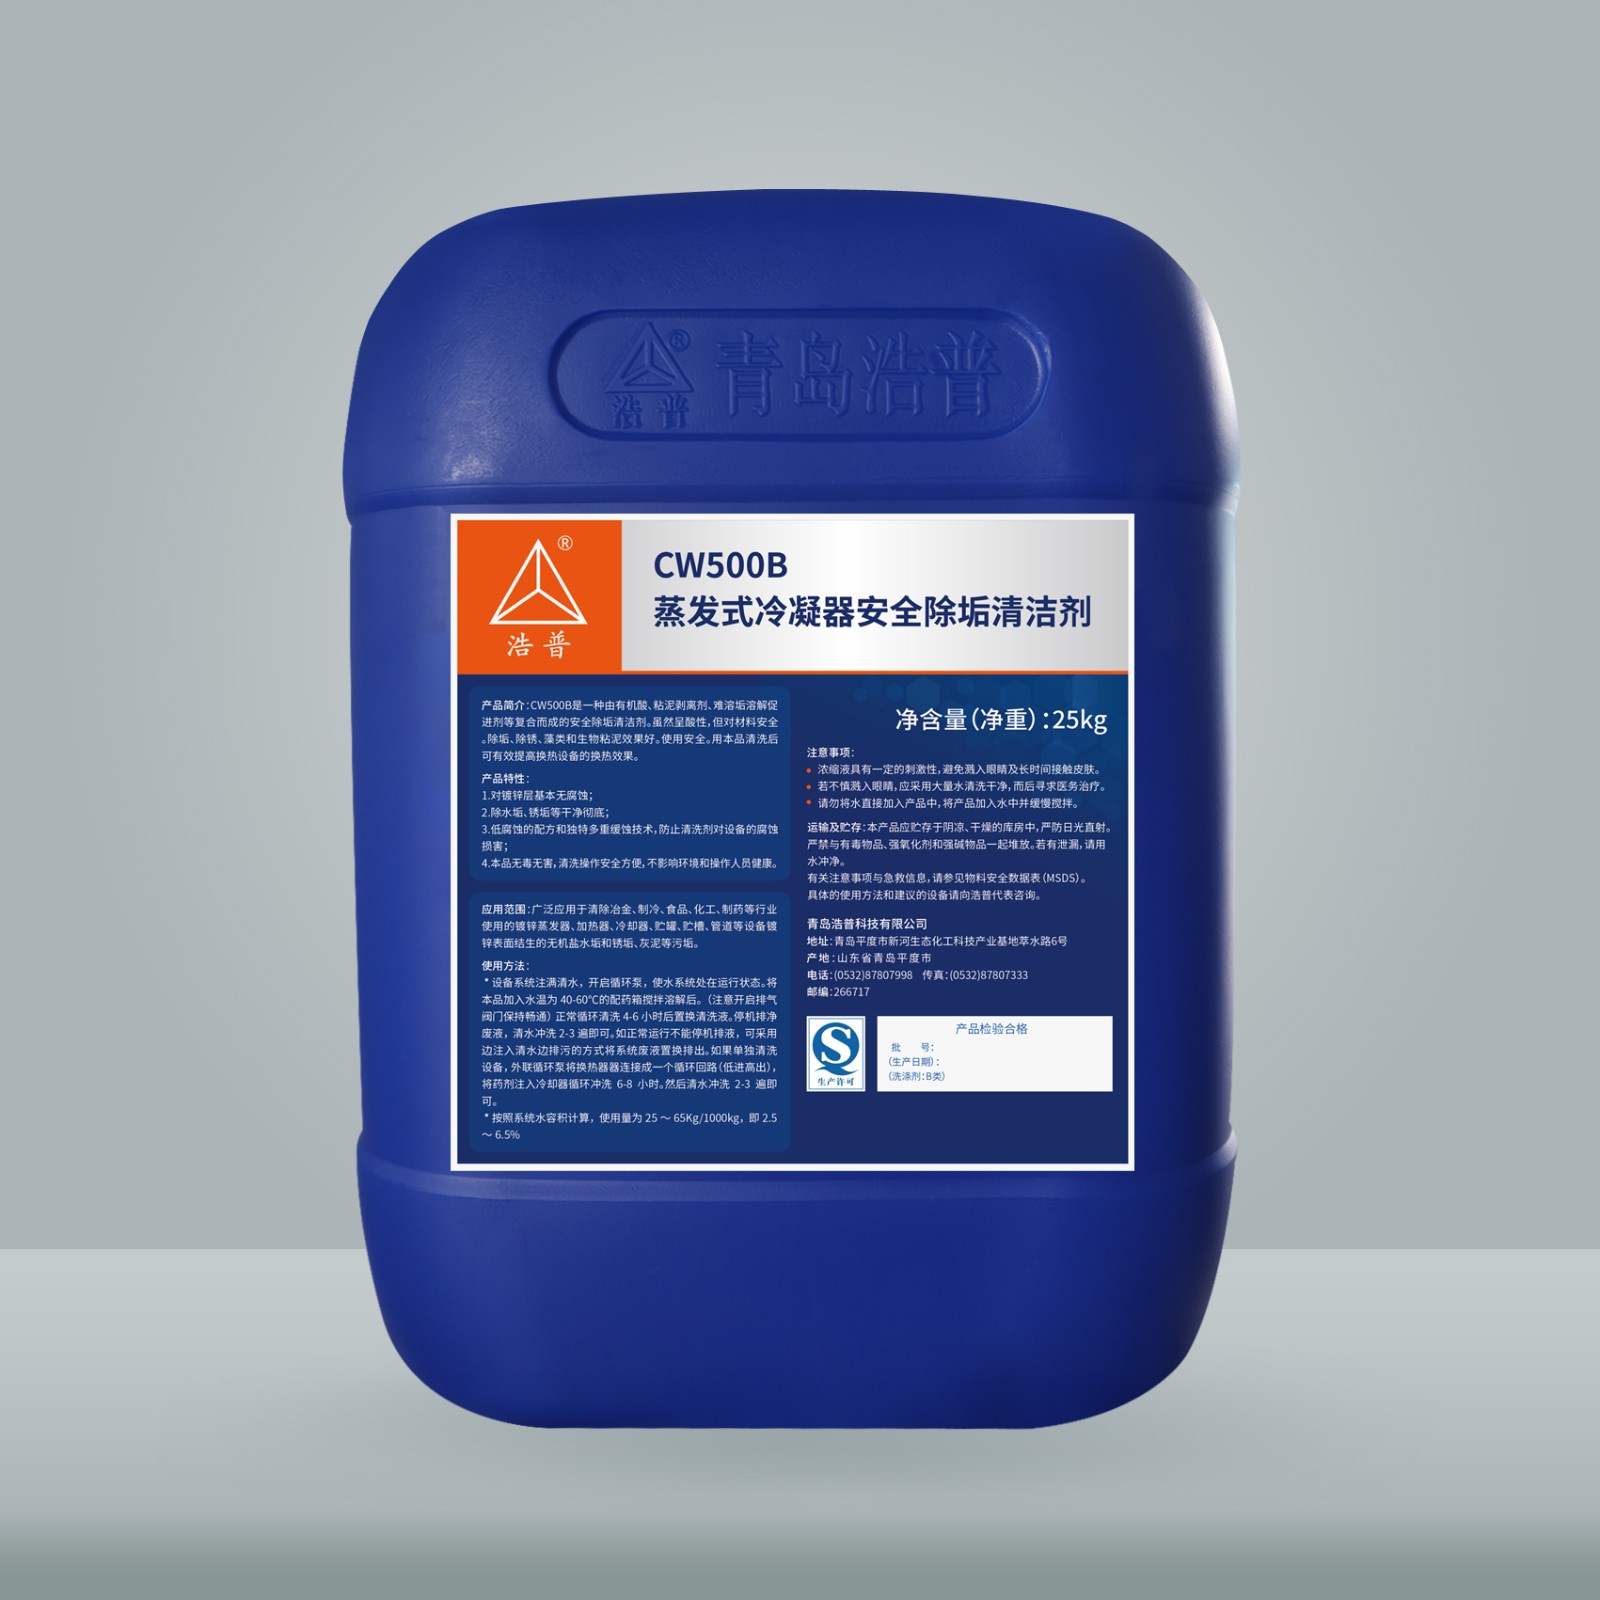 CW500B—蒸发式冷凝器安全除垢清洁剂